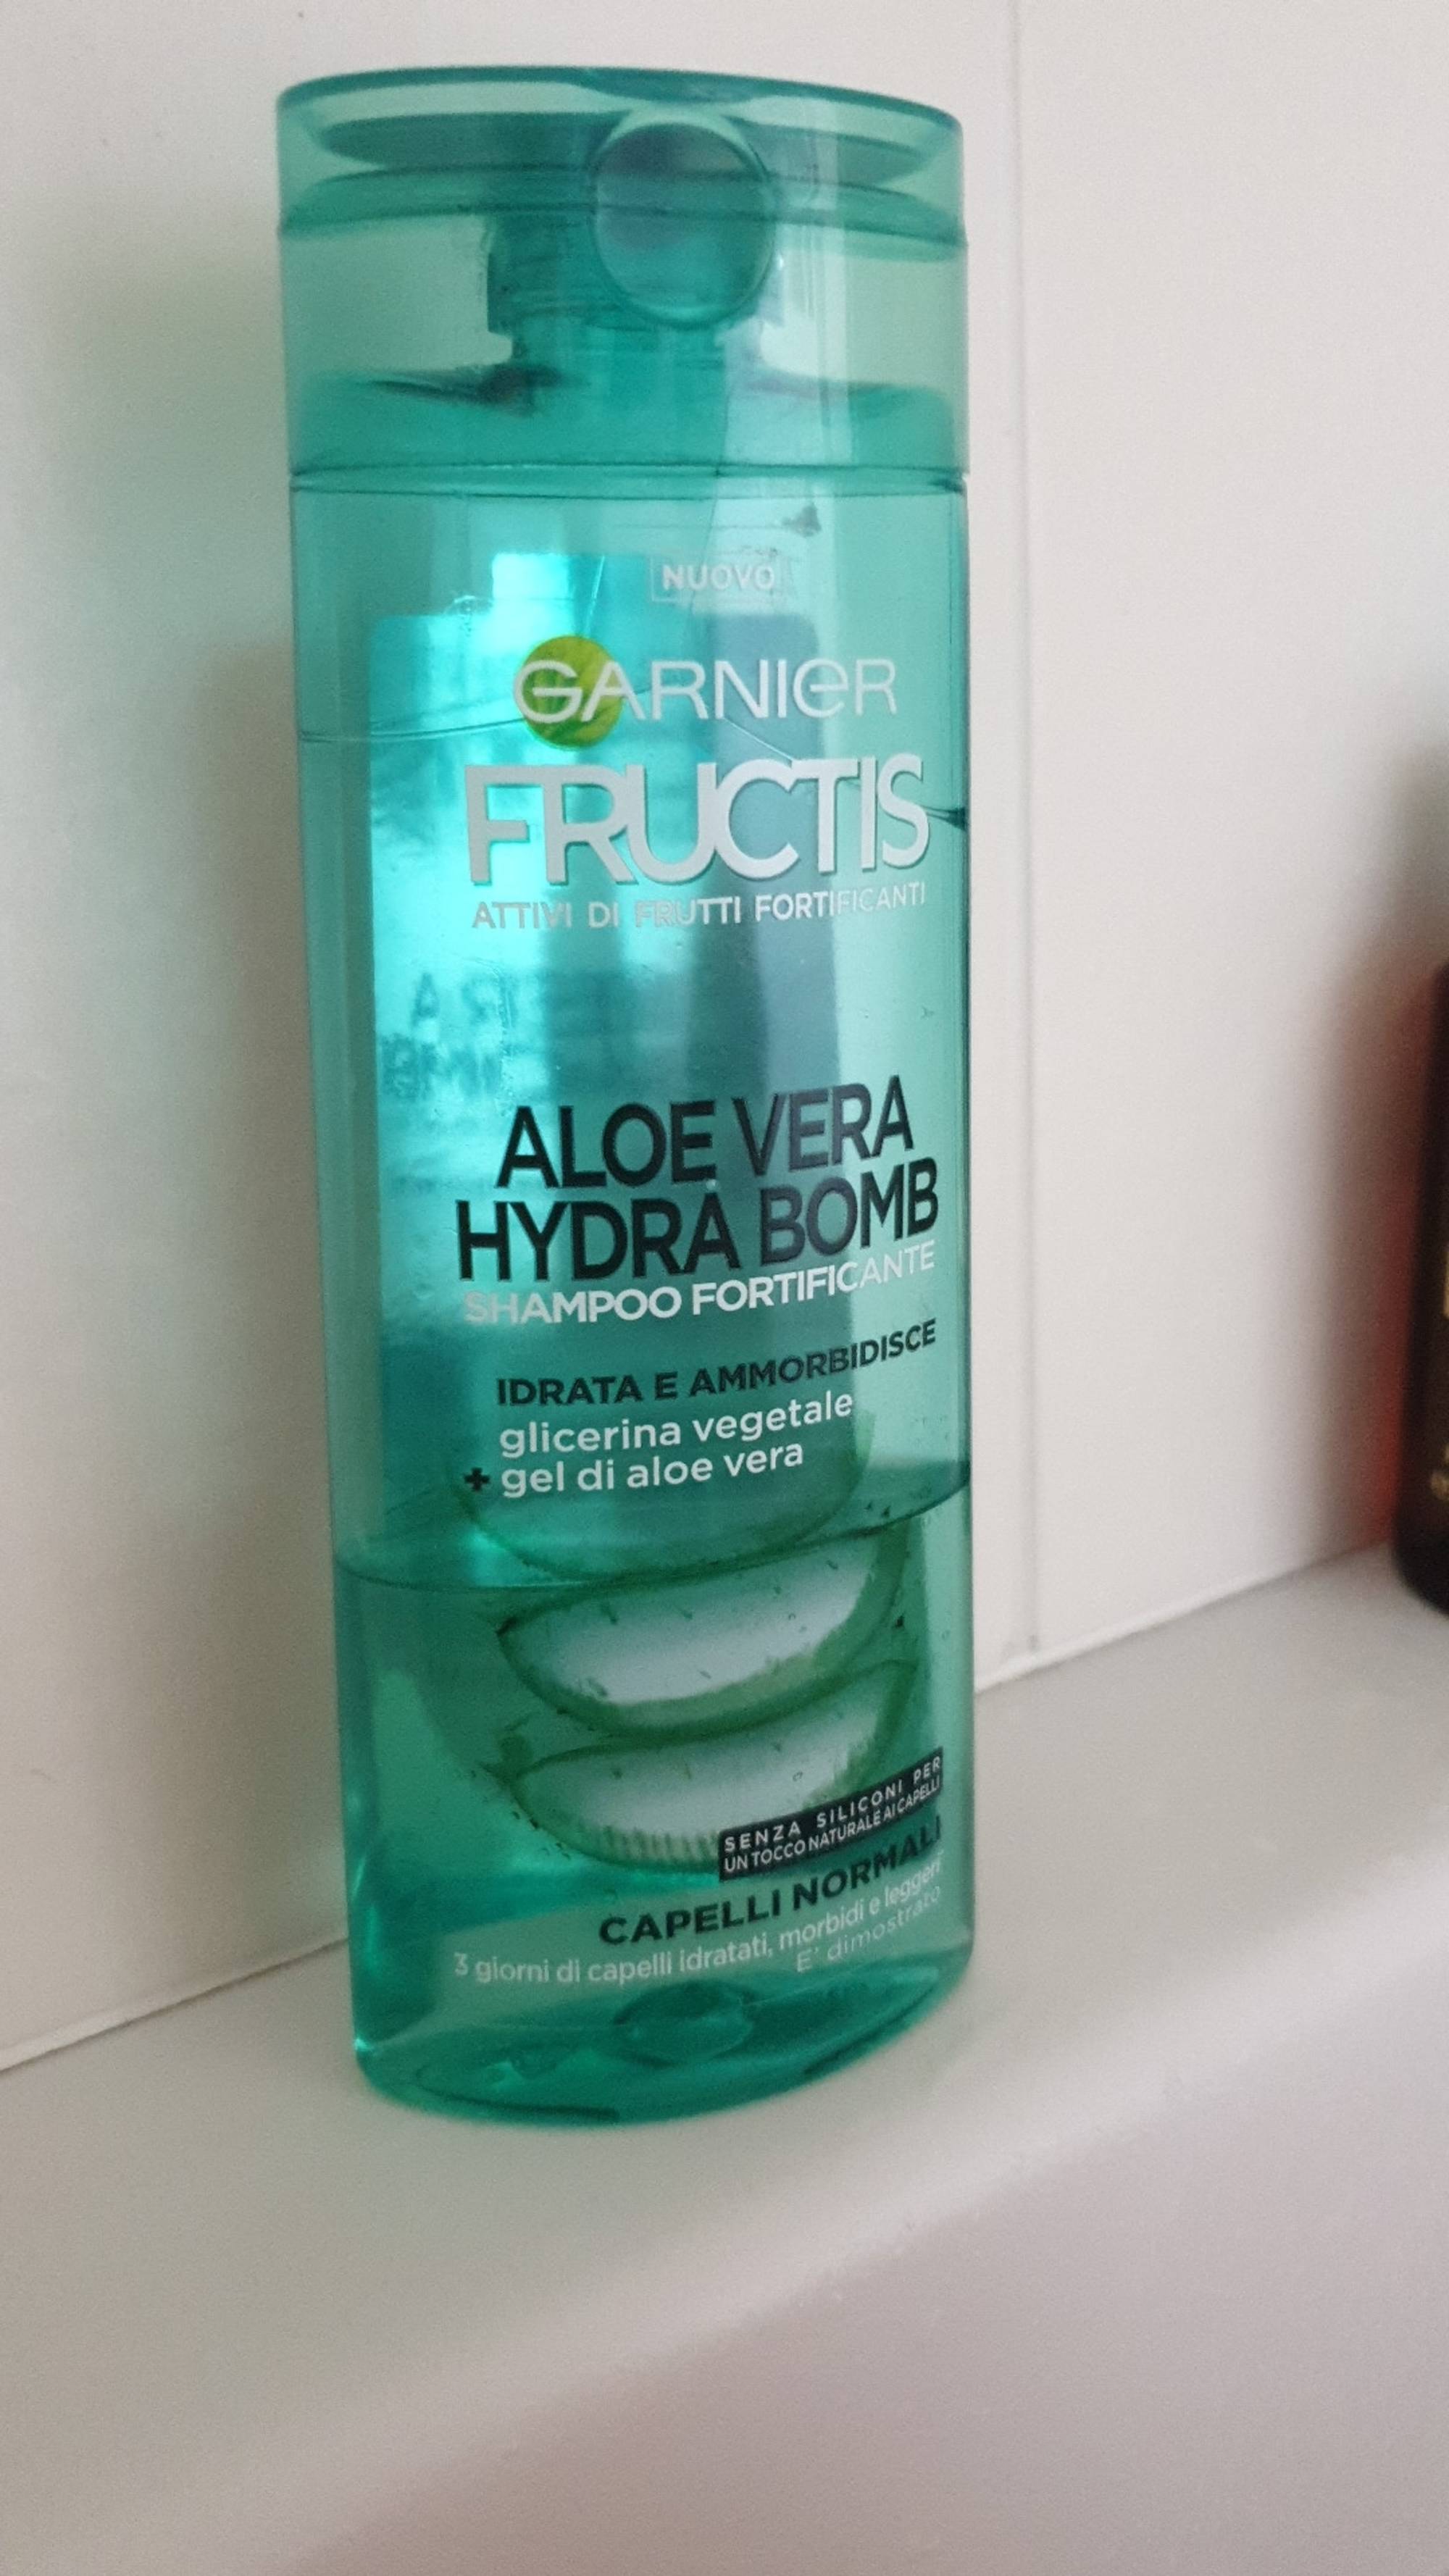 GARNIER - Fructis Aloe vera hydra bomb - shampoo fortificante